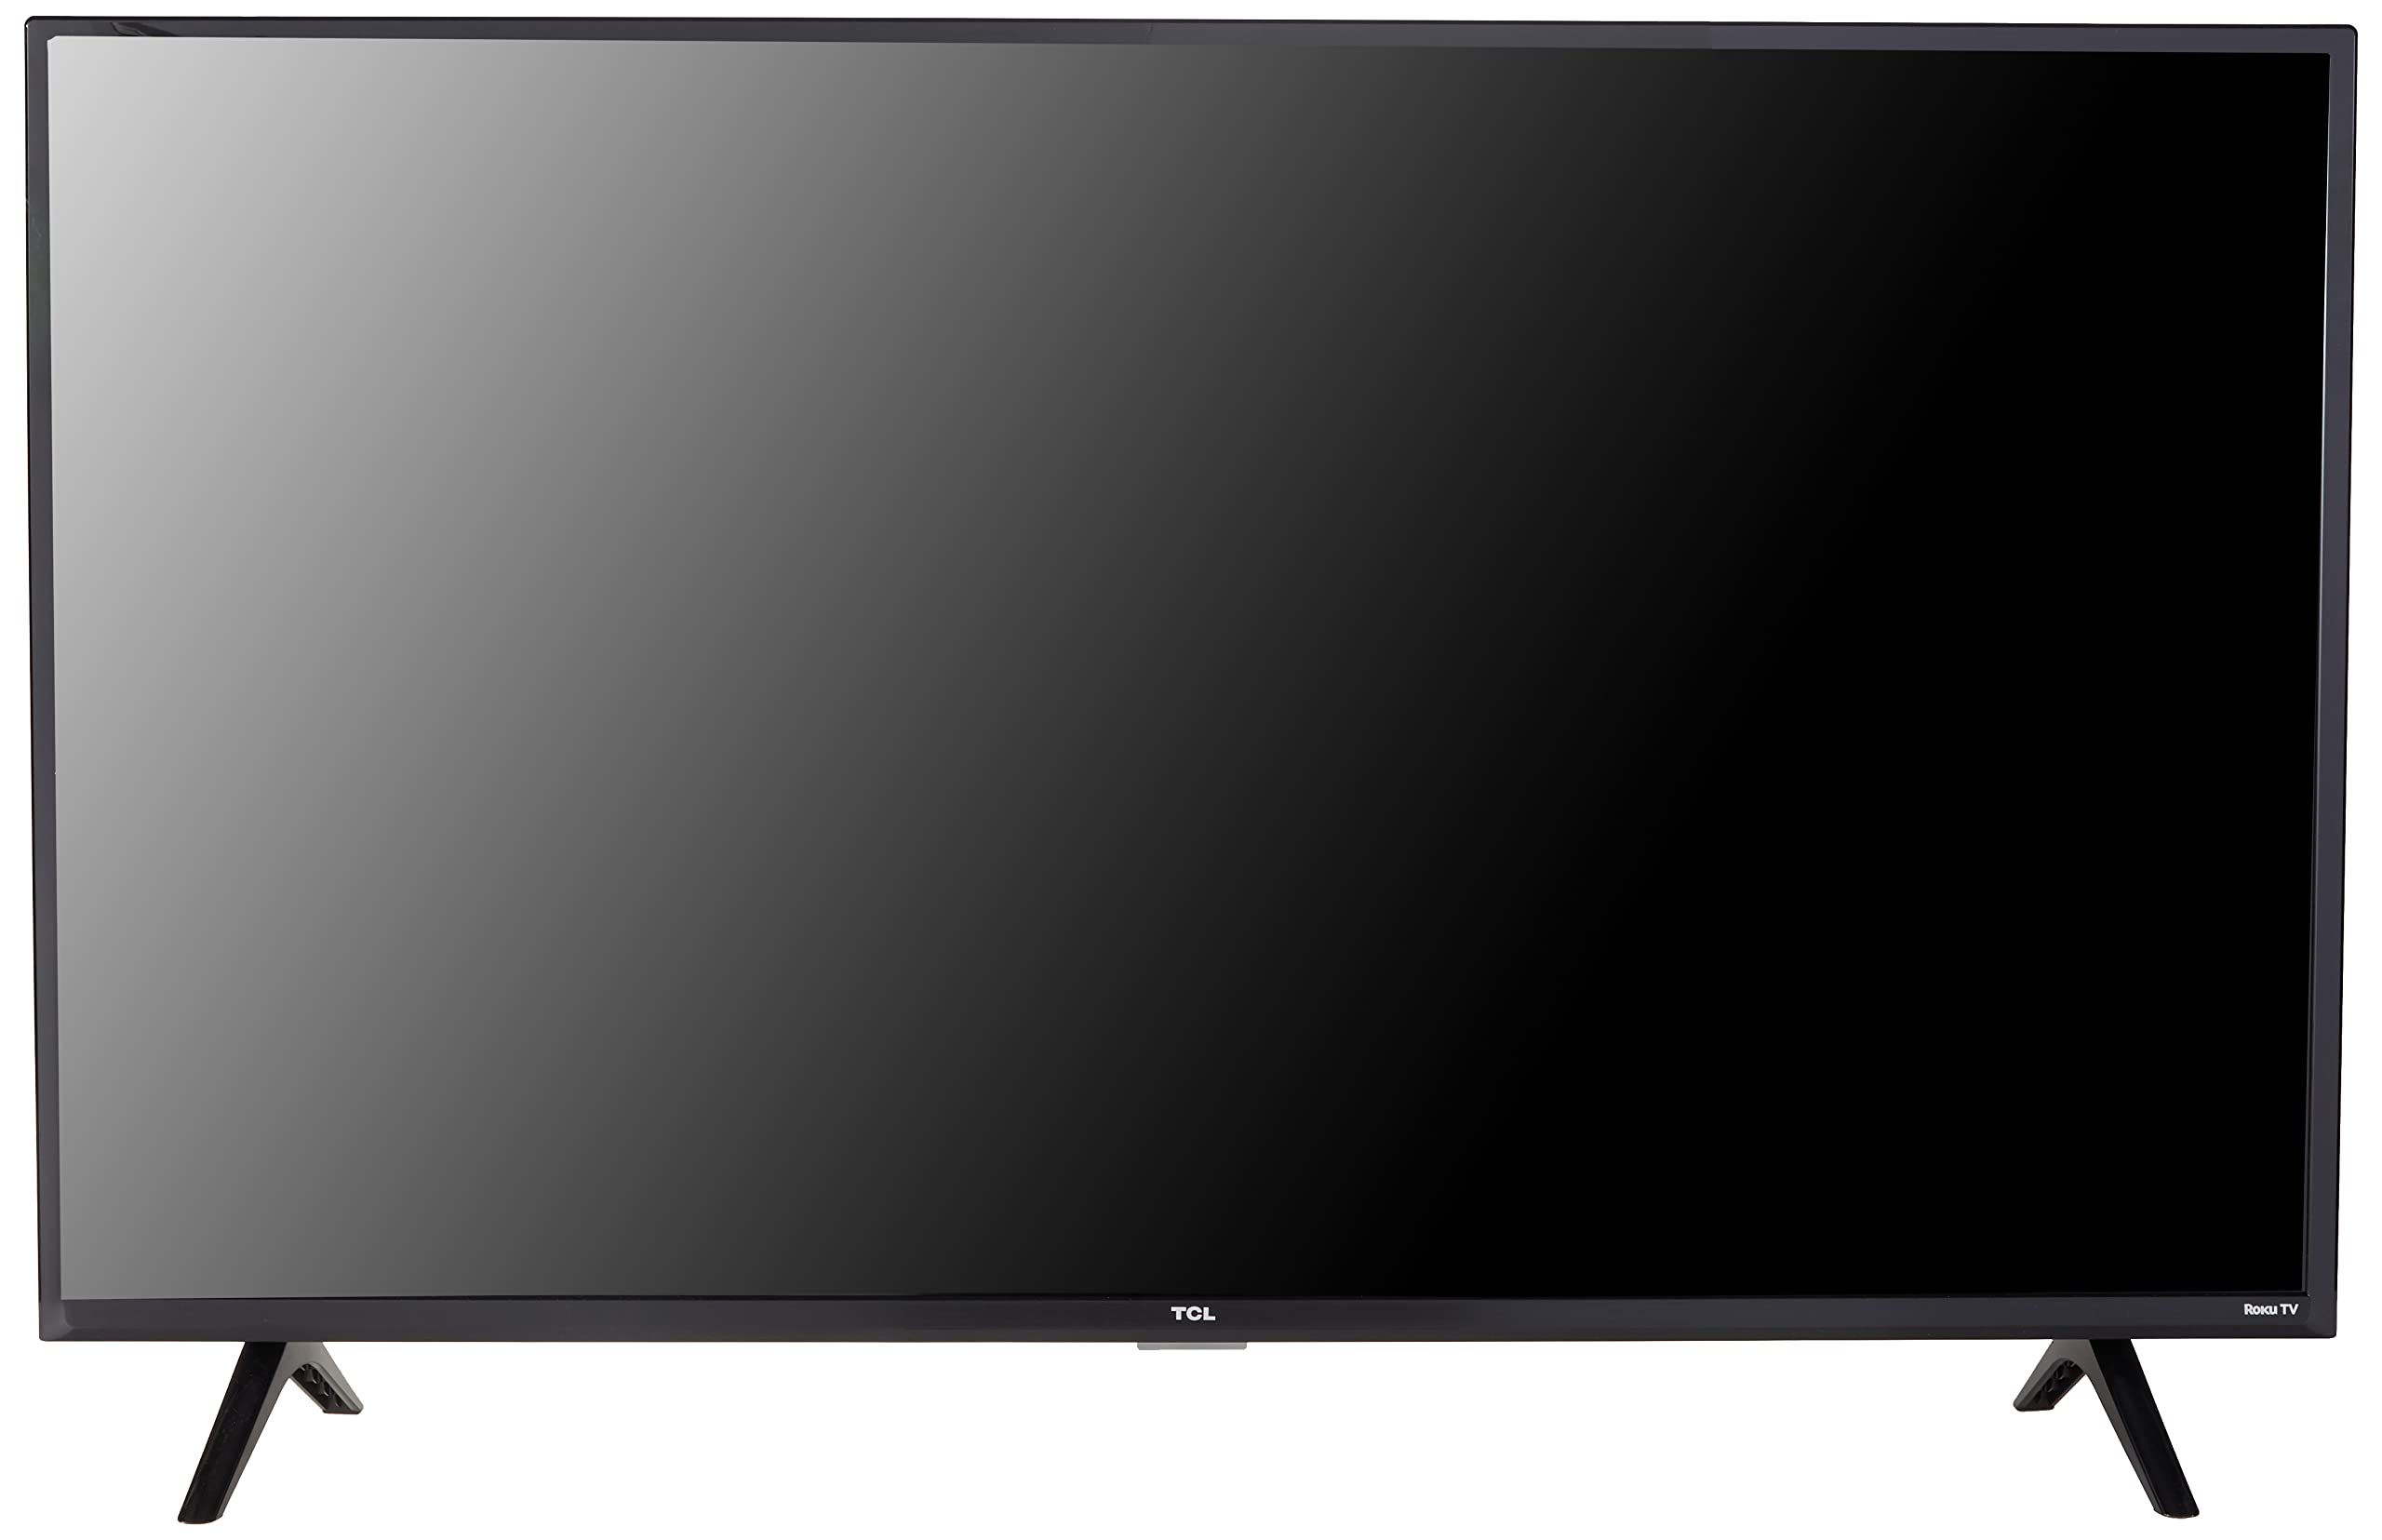 TCL تلفزيون سمارت روكو الذكي 40 بوصة من الفئة 3 - سيريز فل اتش دي 1080 بكسل - 40S355